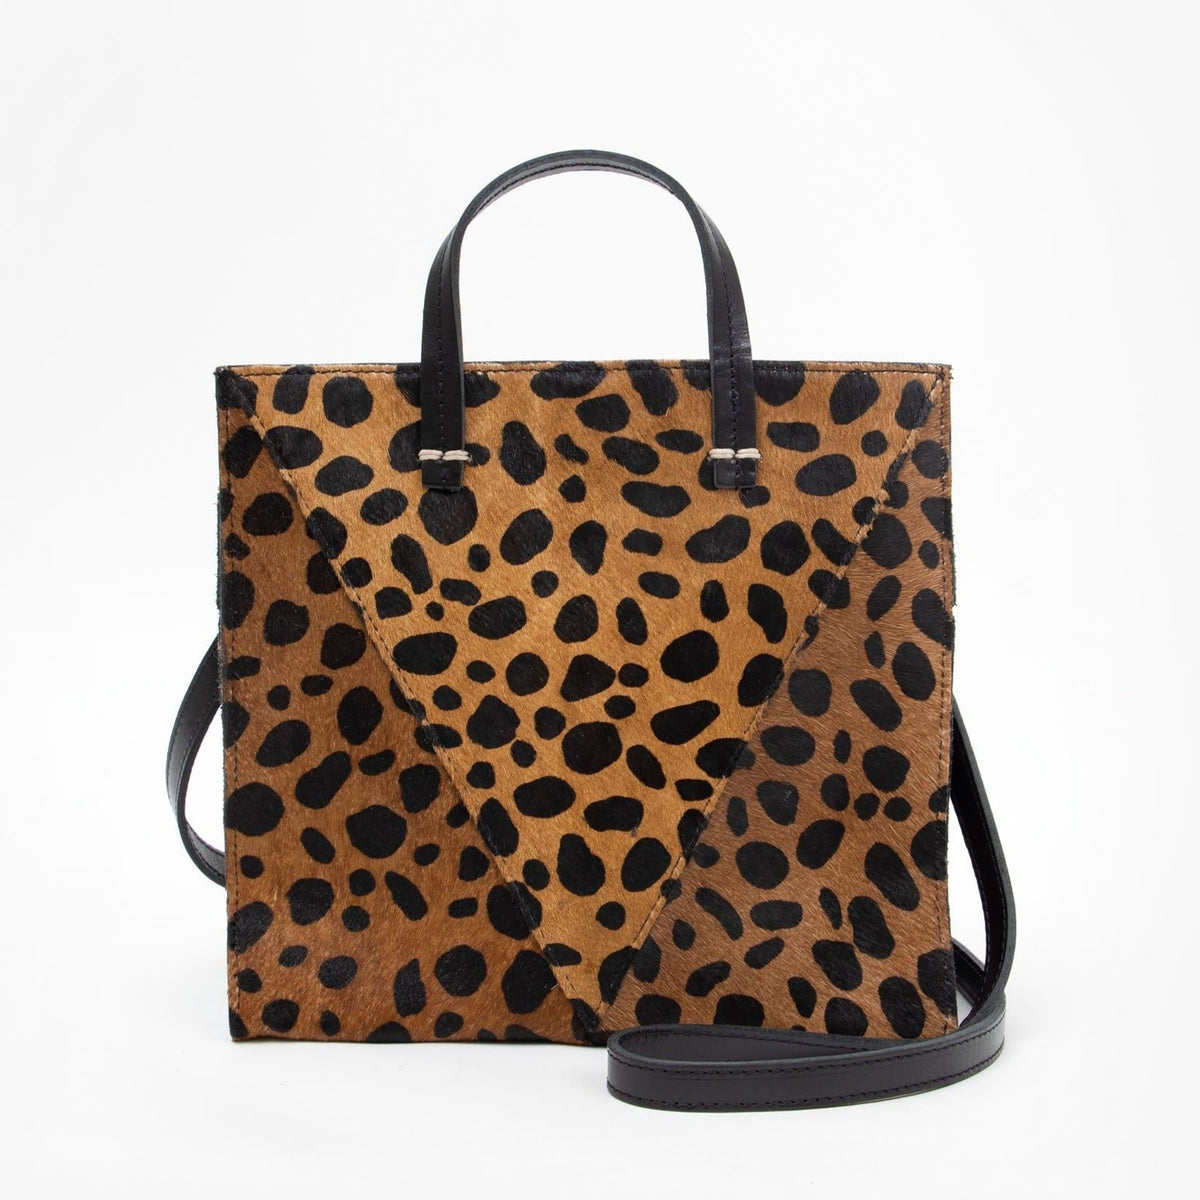 Clare V, Bags, Clare V Leopard Tote